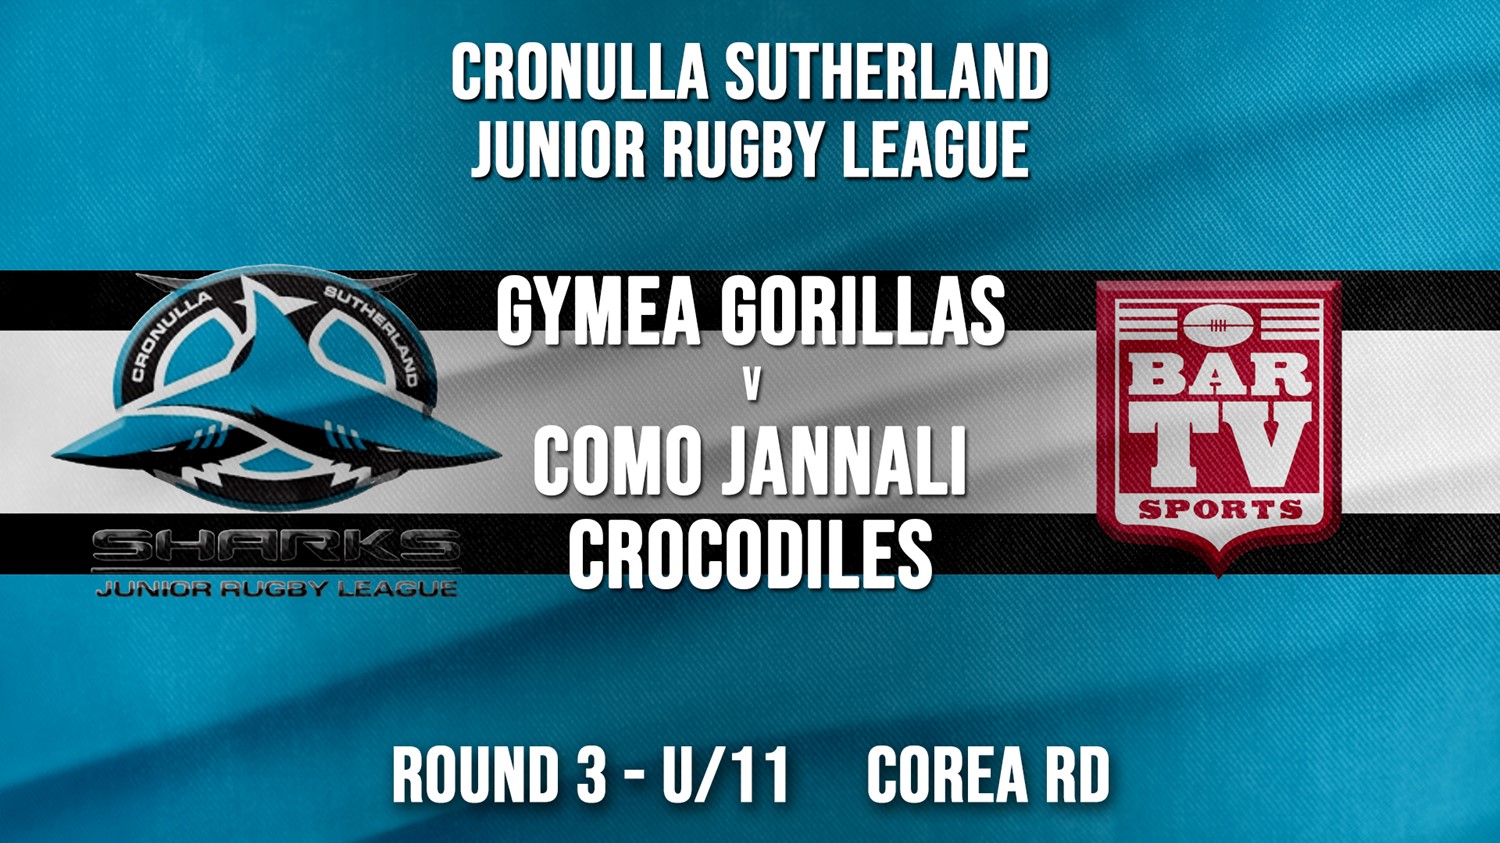 Cronulla JRL Round 3 - U/11 - Gymea Gorillas v Como Jannali Crocodiles Minigame Slate Image